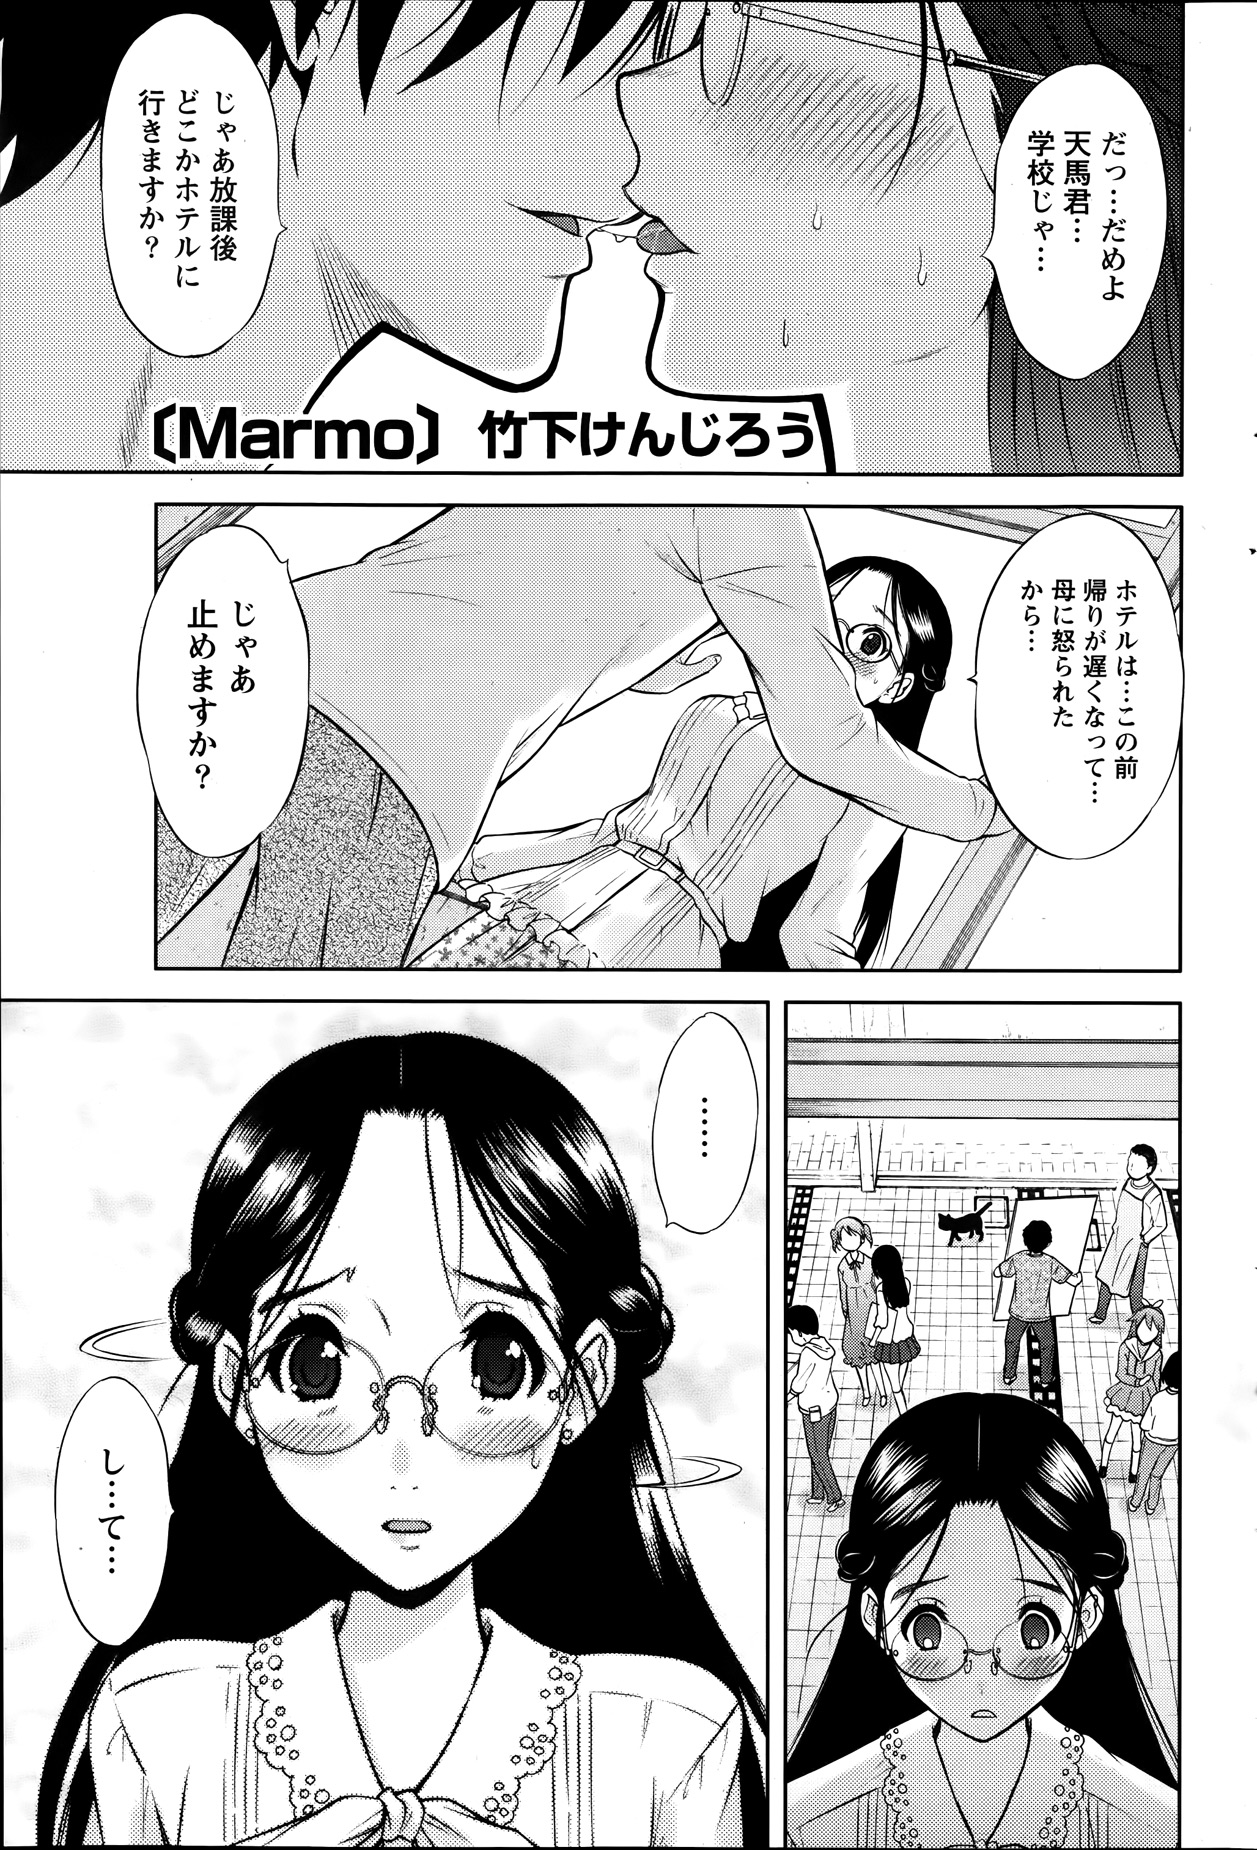 [Takeshita Kenjirou] Marmo Ch.1-9 (Complete) [竹下けんじろう] Marmo 全9話